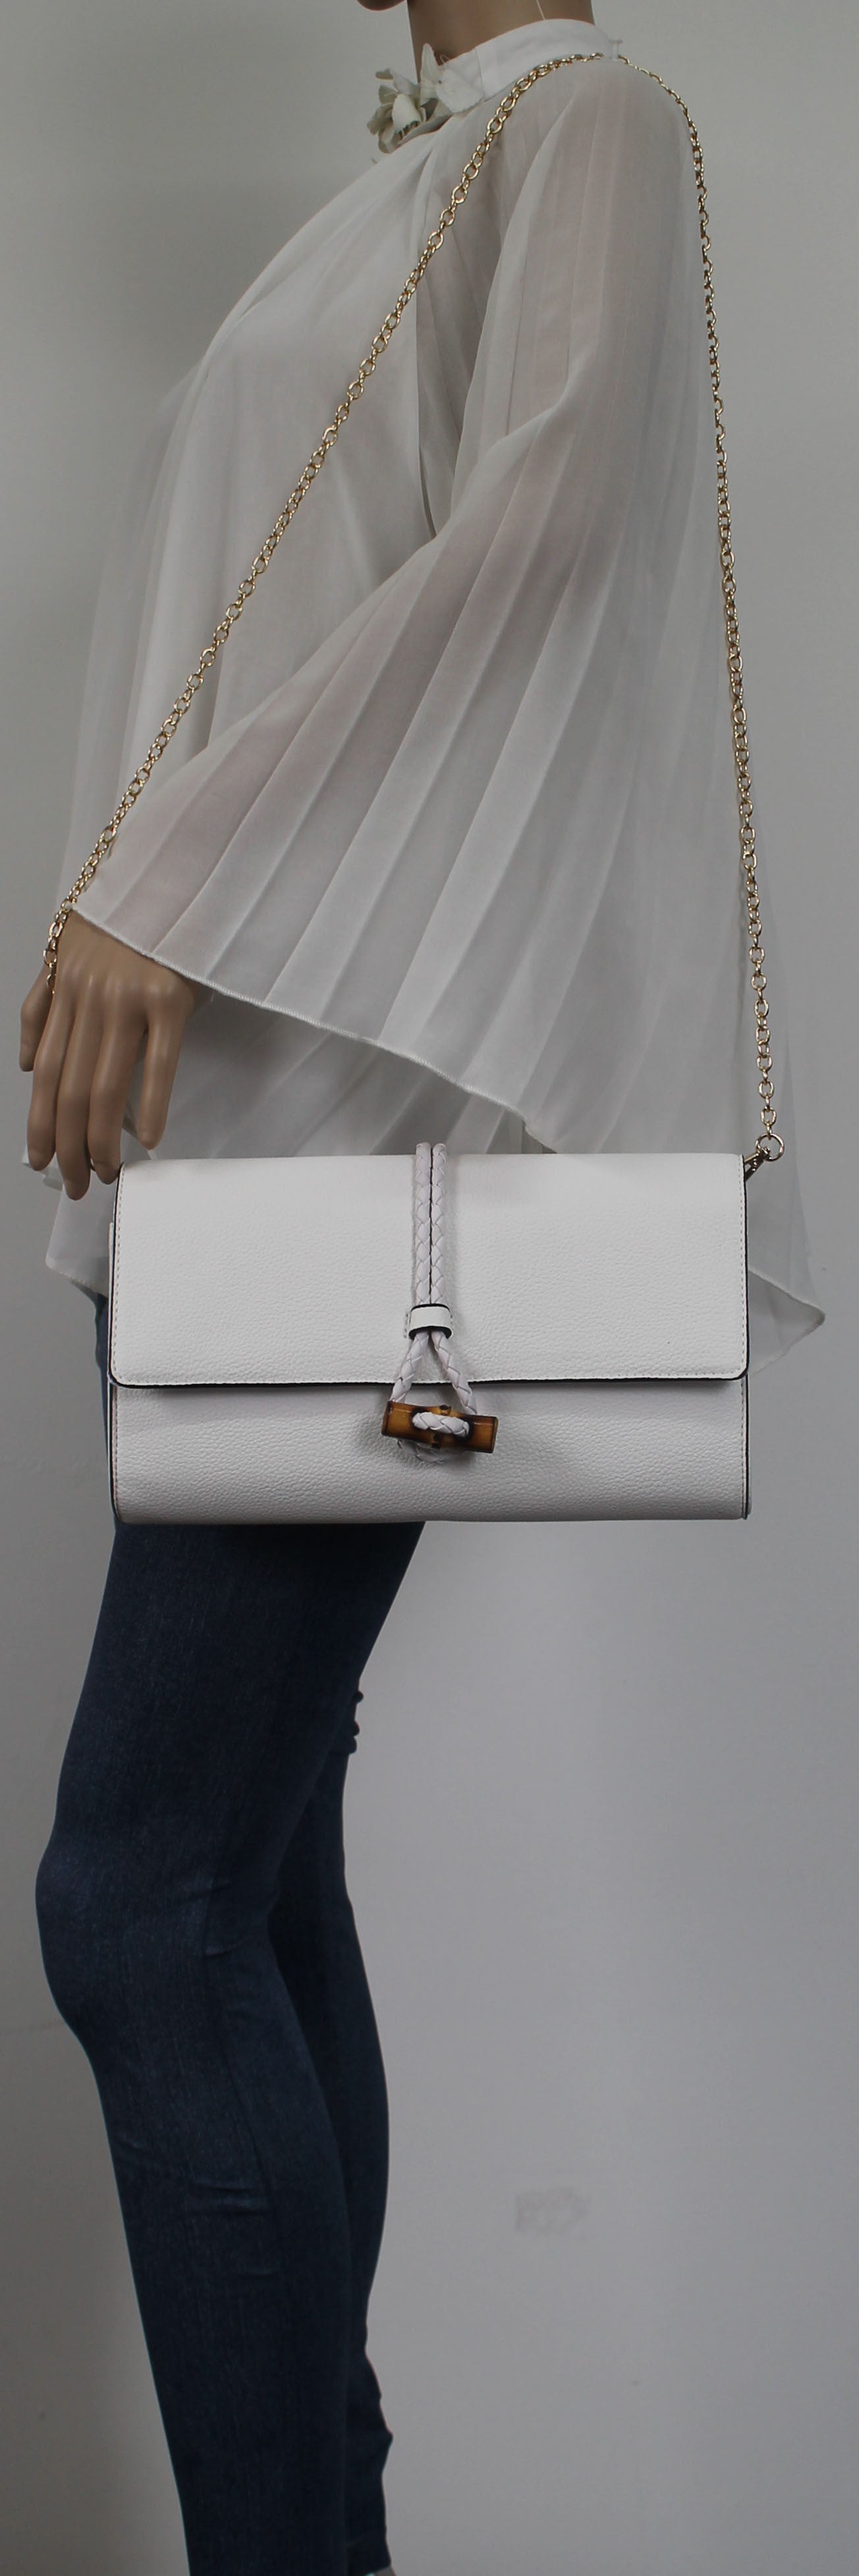 SWANKYSWANS Sophia Clutch Bag White Cute Cheap Clutch Bag For Weddings School and Work